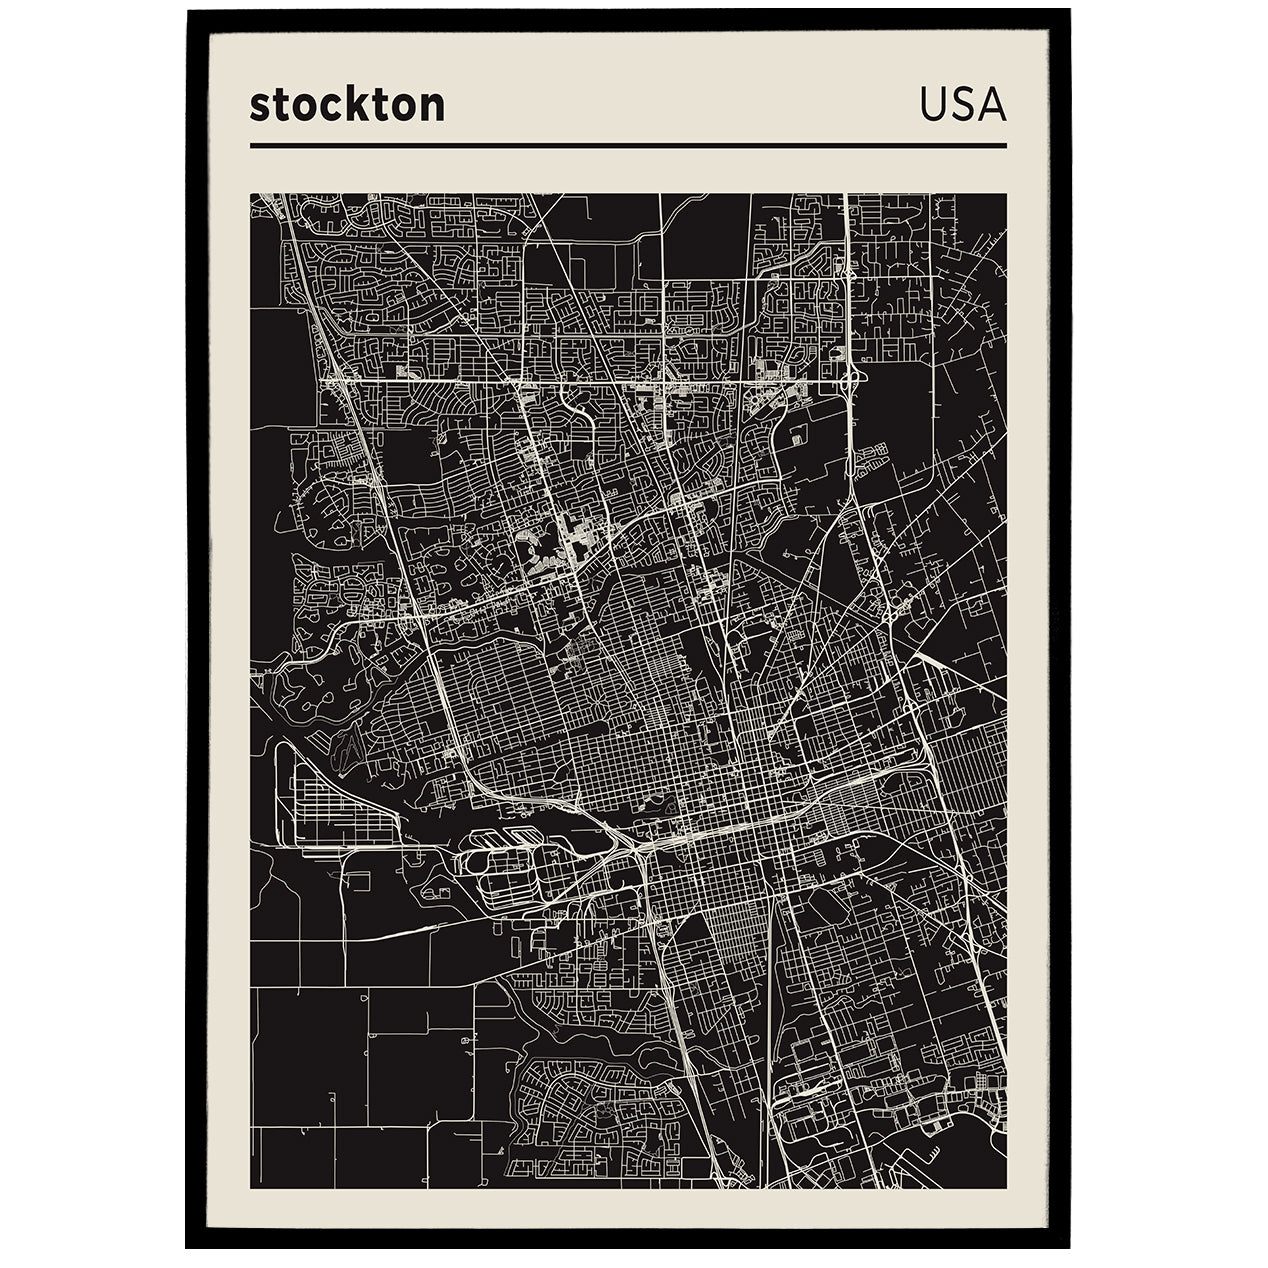 Stockton - USA | City Map Poster - Black and White